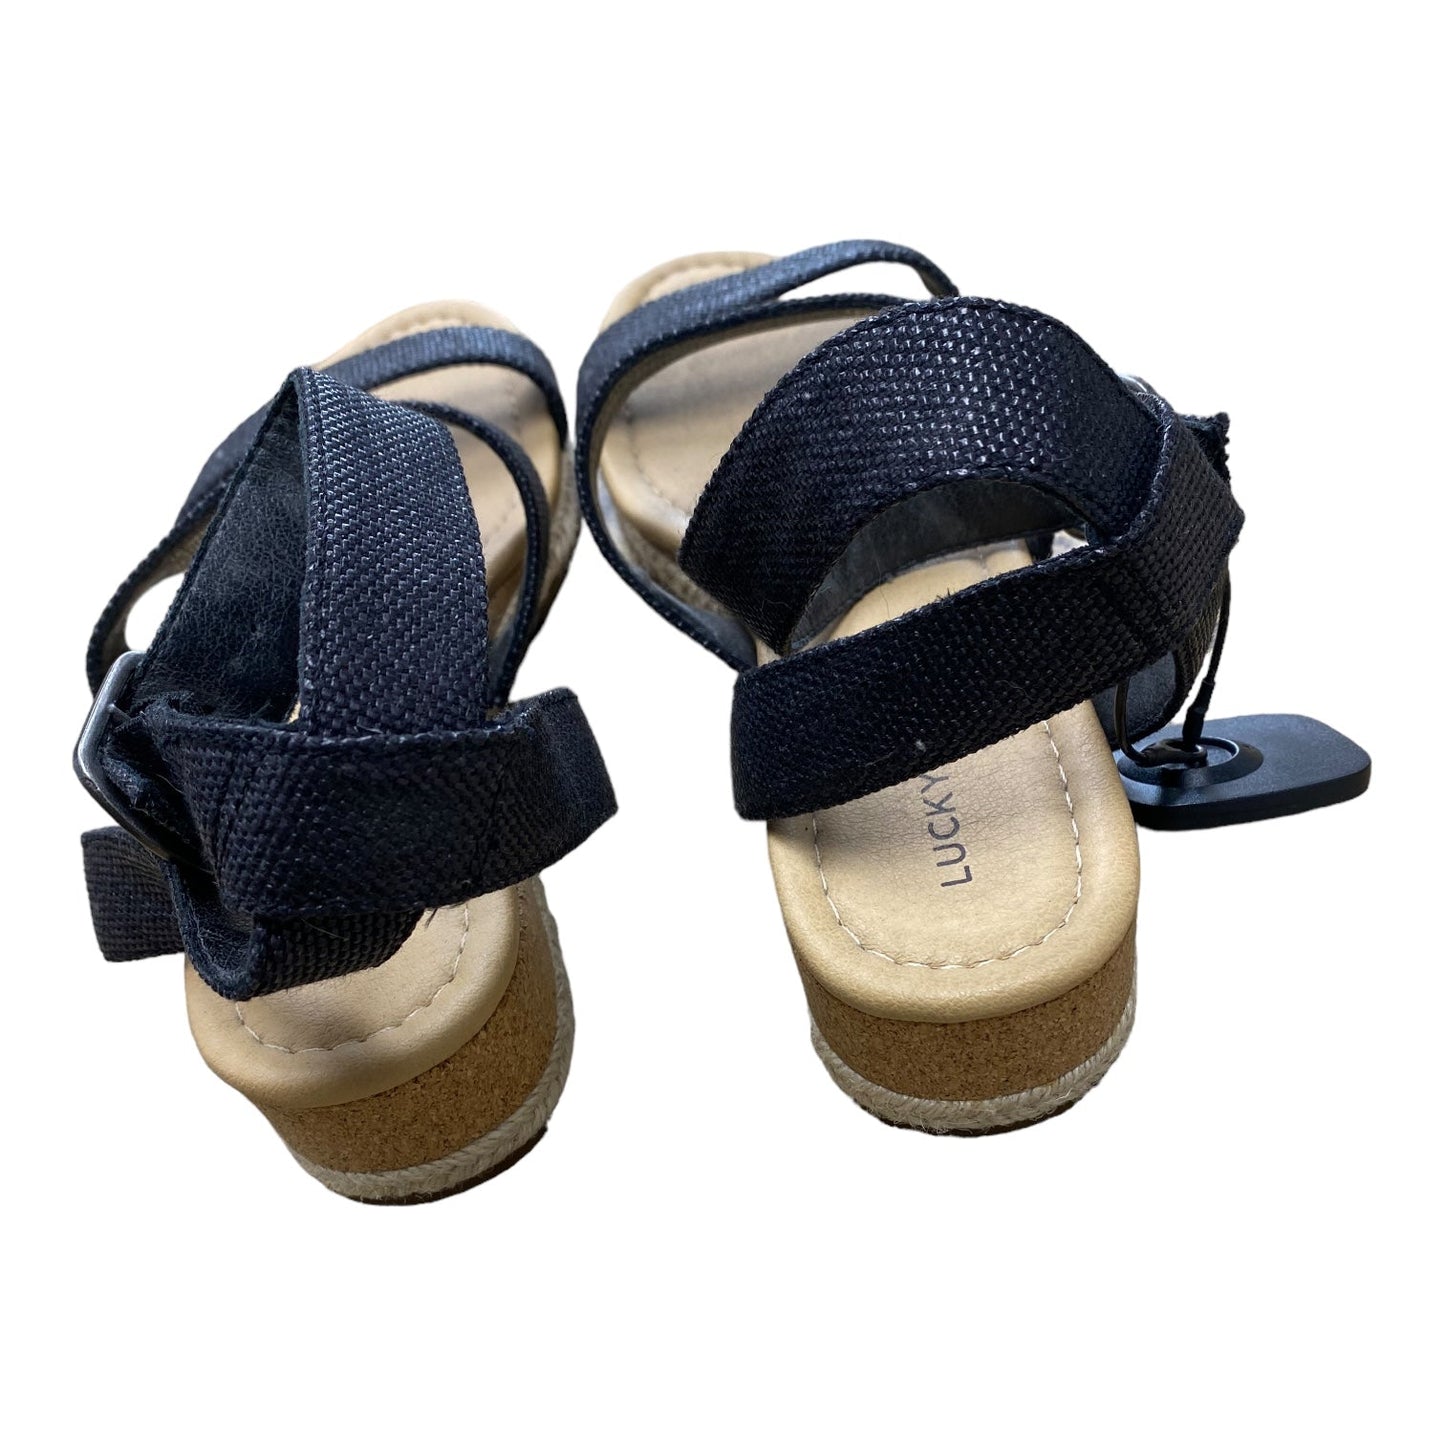 Black & Tan Sandals Flats Lucky Brand, Size 10